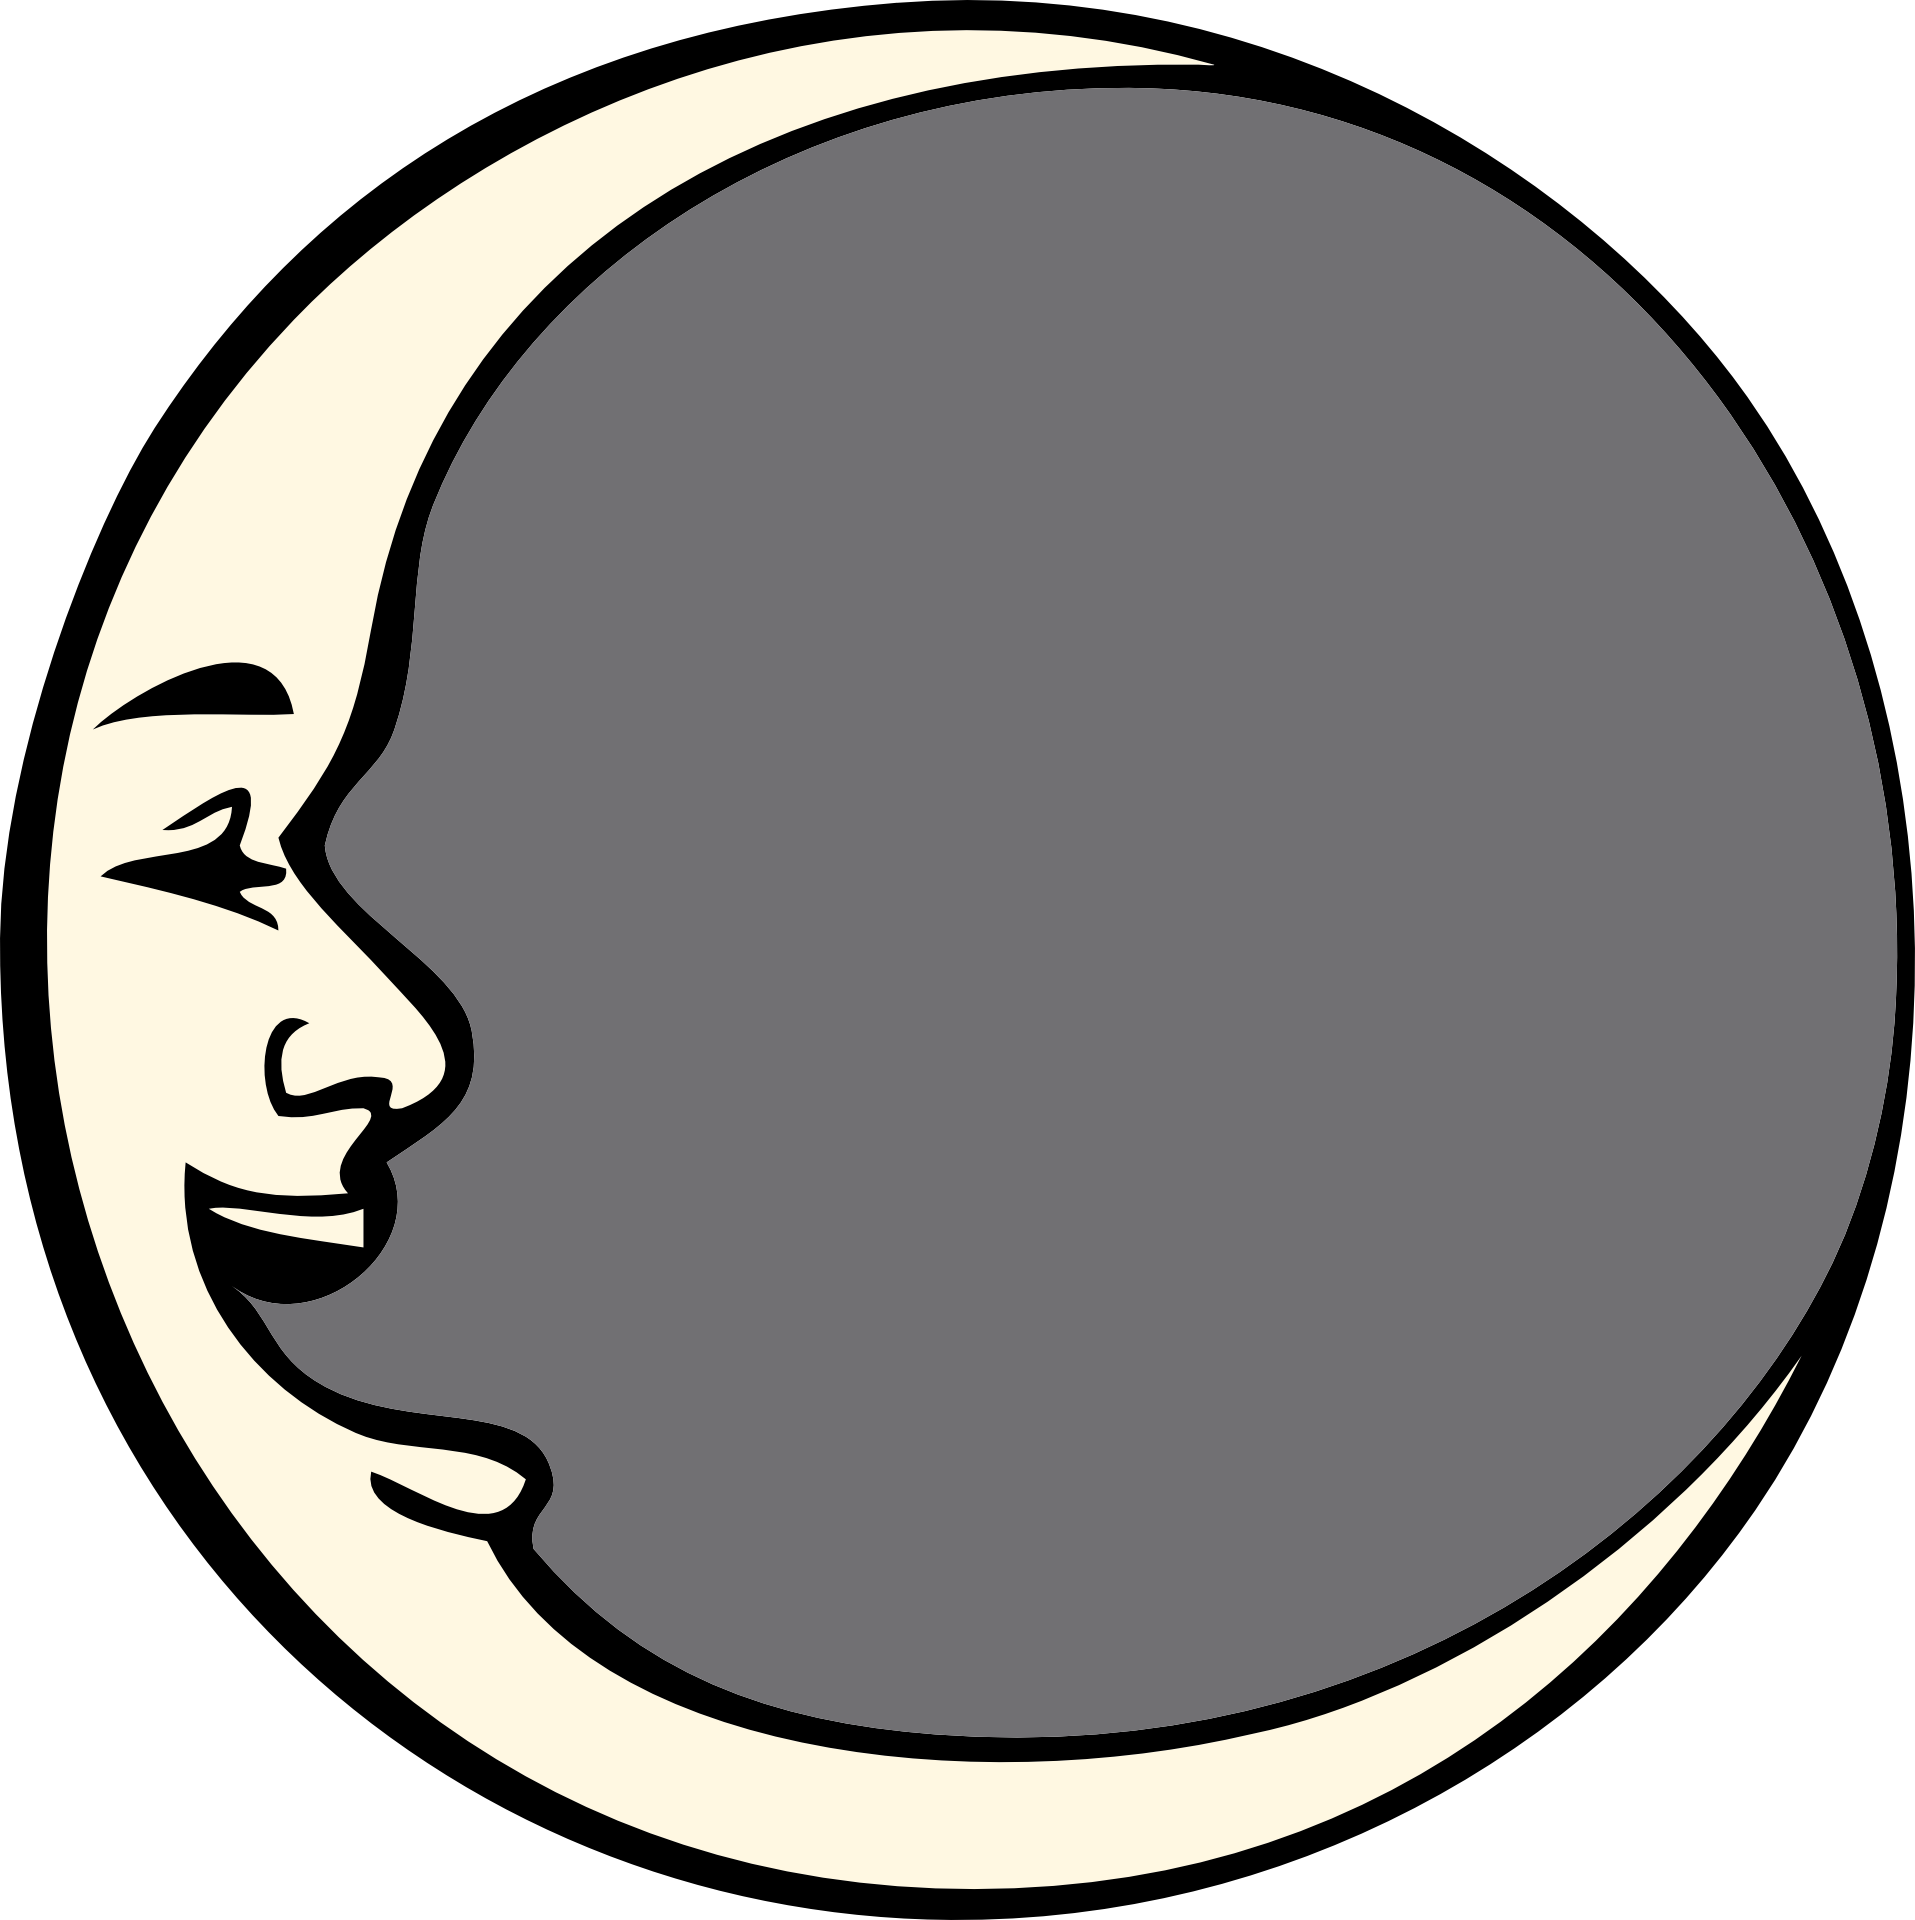 Moon man face drawing free image download